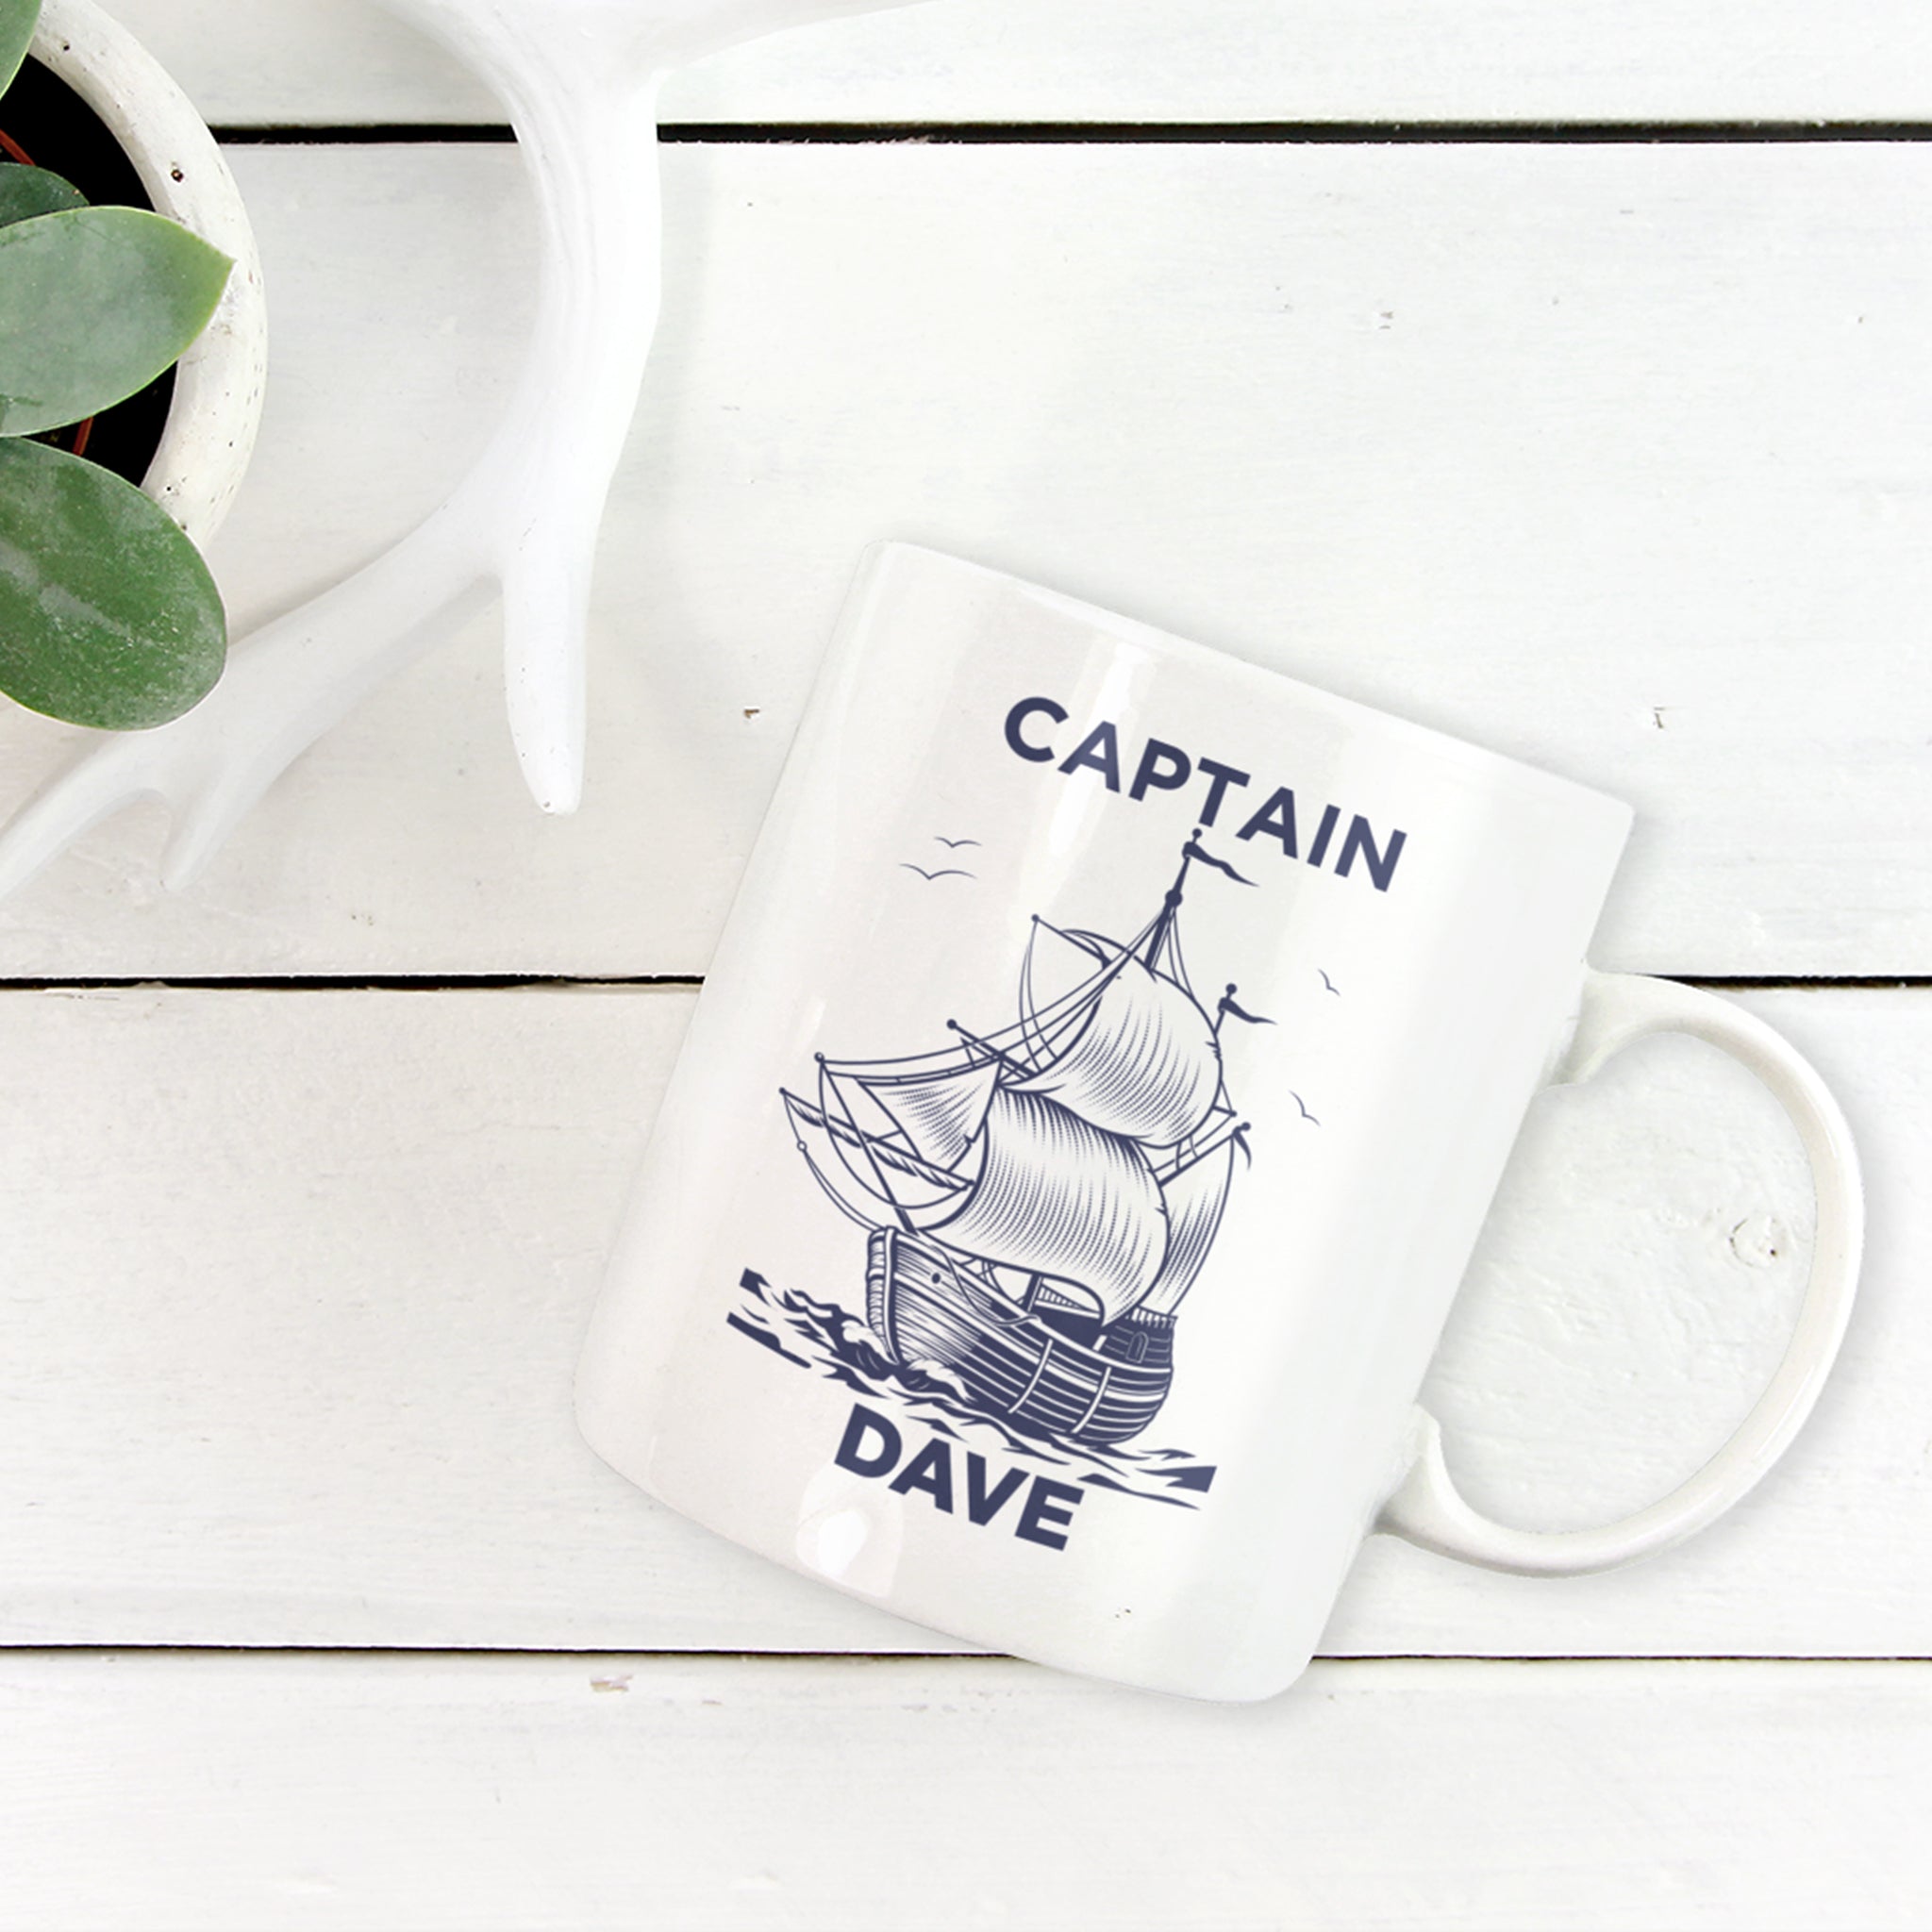 Personalized Captain Ceramic Mug